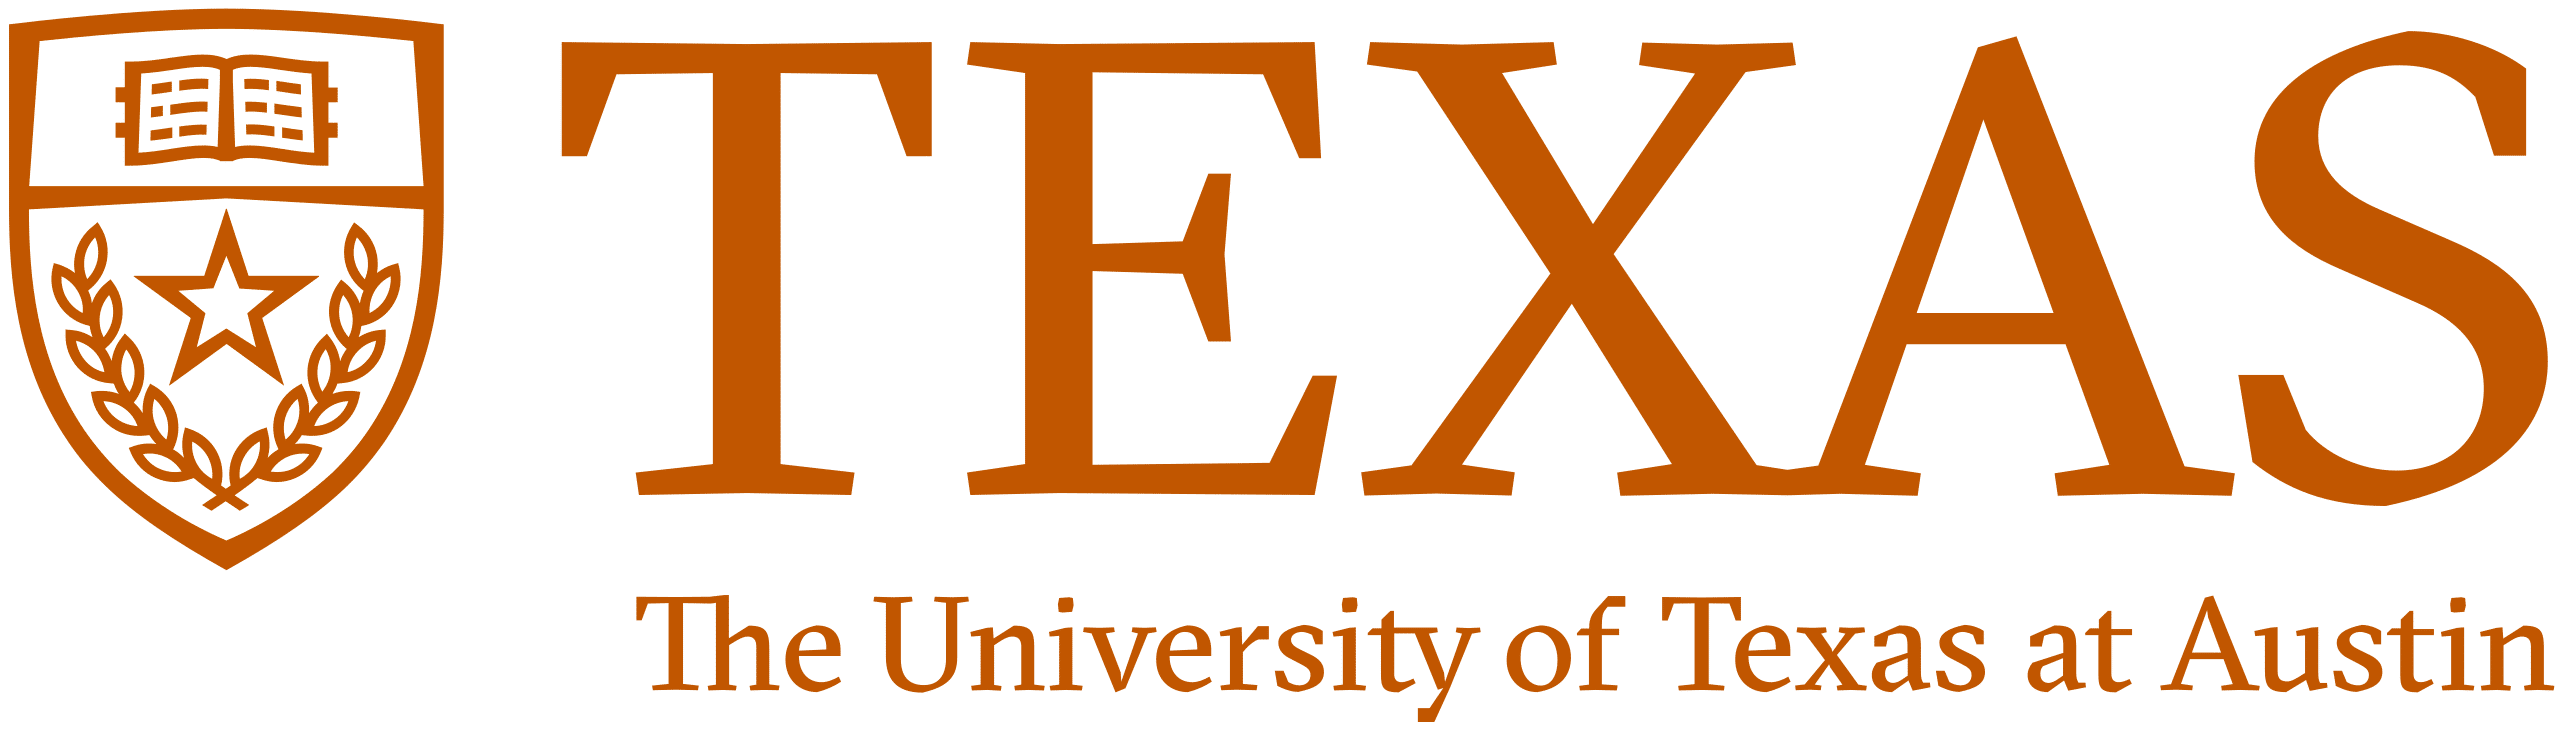 University_of_Texas_at_Austin_logo